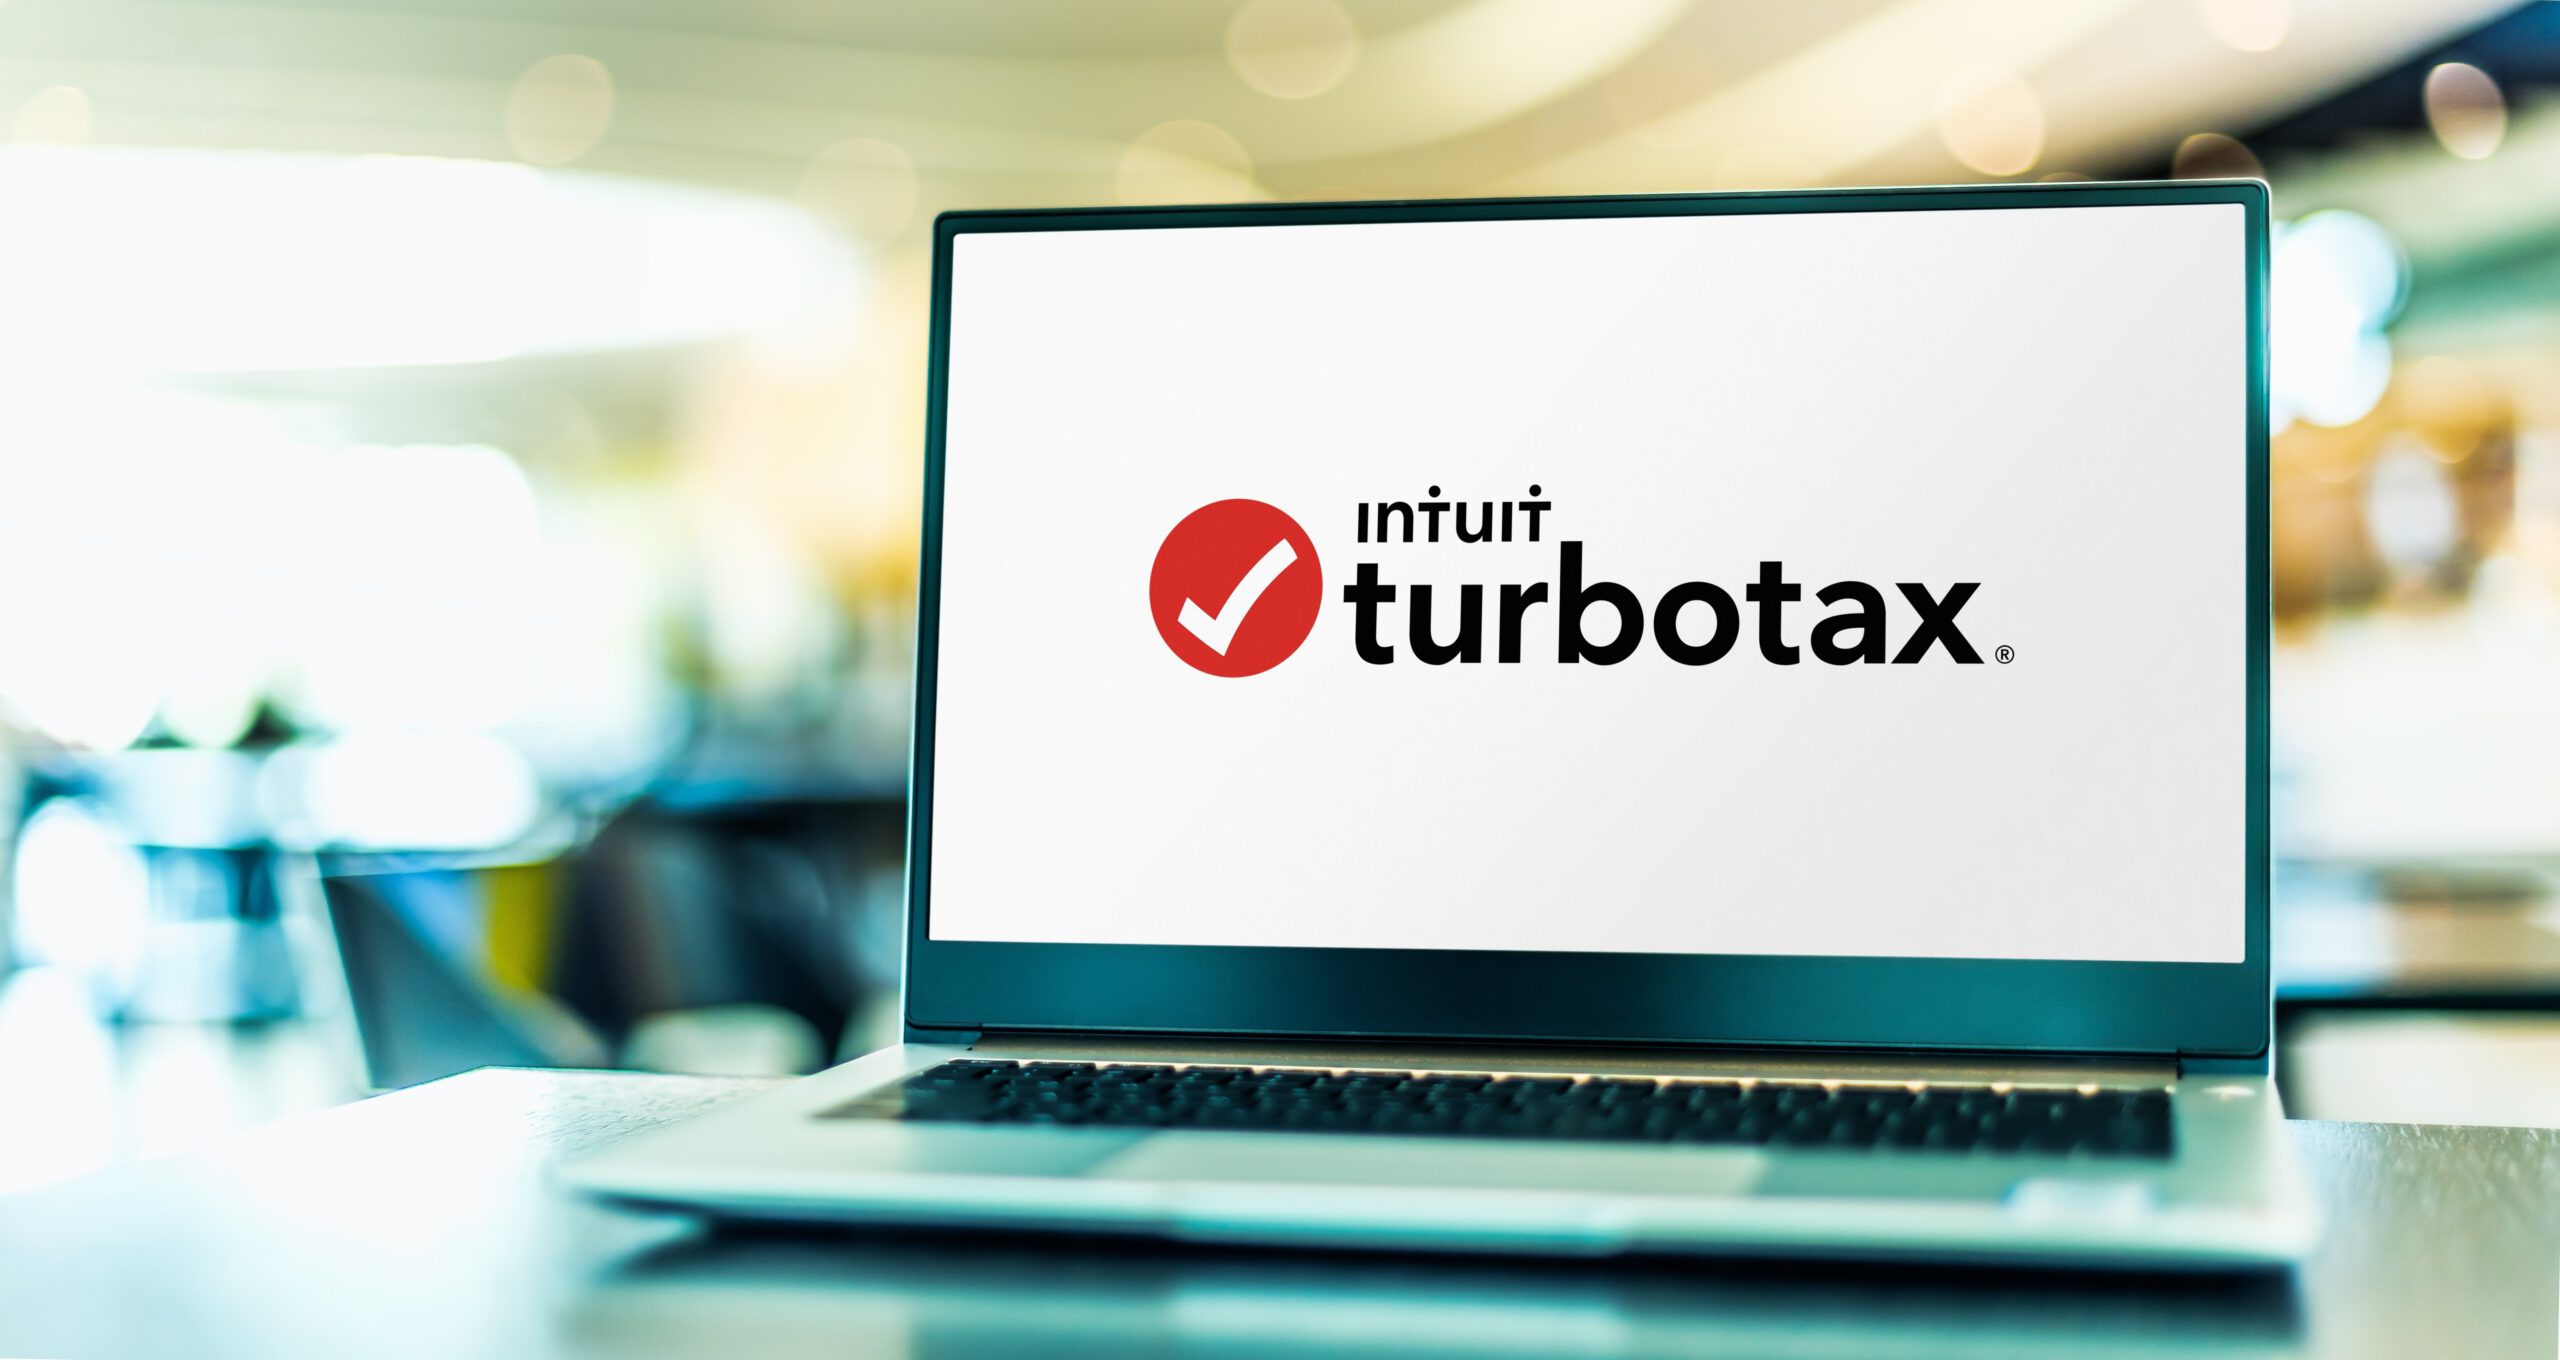 TurboTax on a laptop